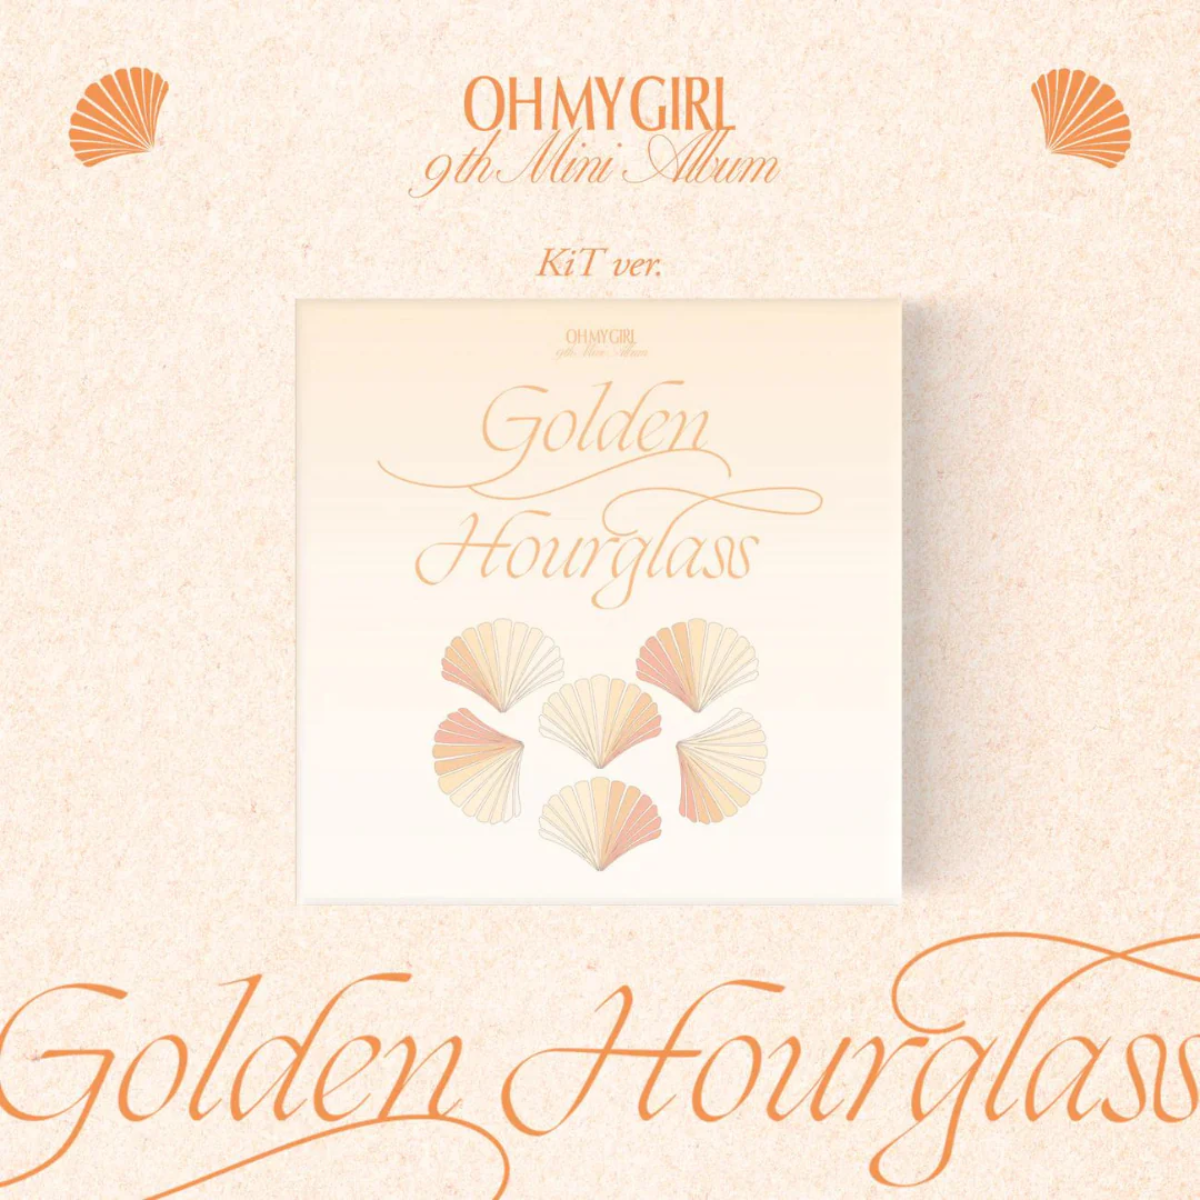 OH MY GIRL Mini Vol. 9 - Golden Hourglass (KiT version)